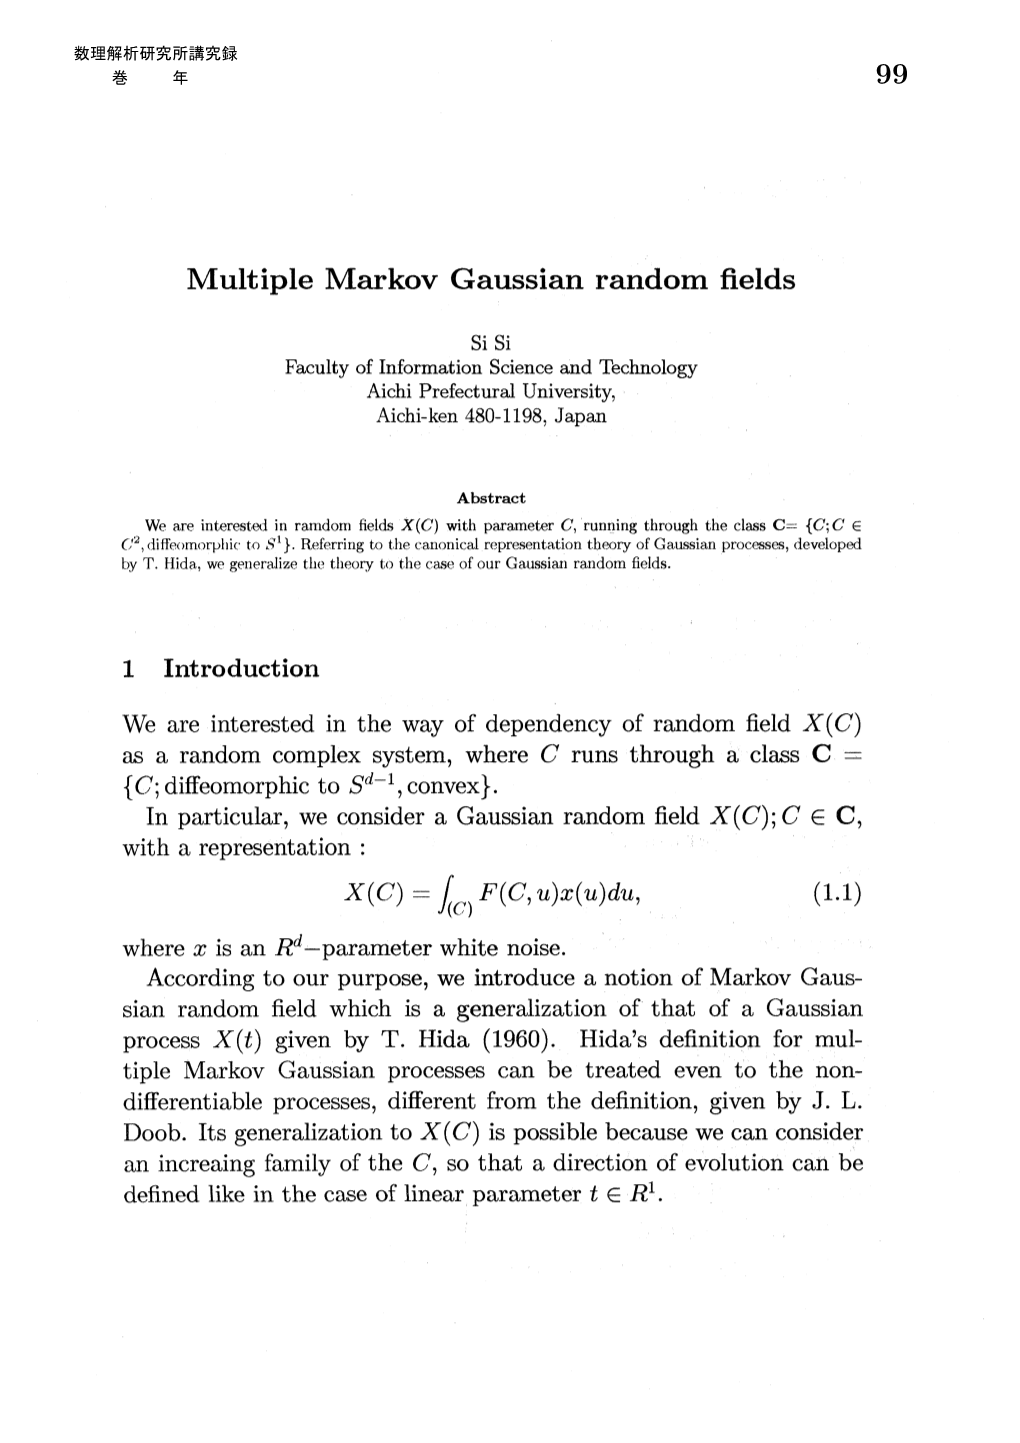 Multiple Markov Gaussian Random Fields